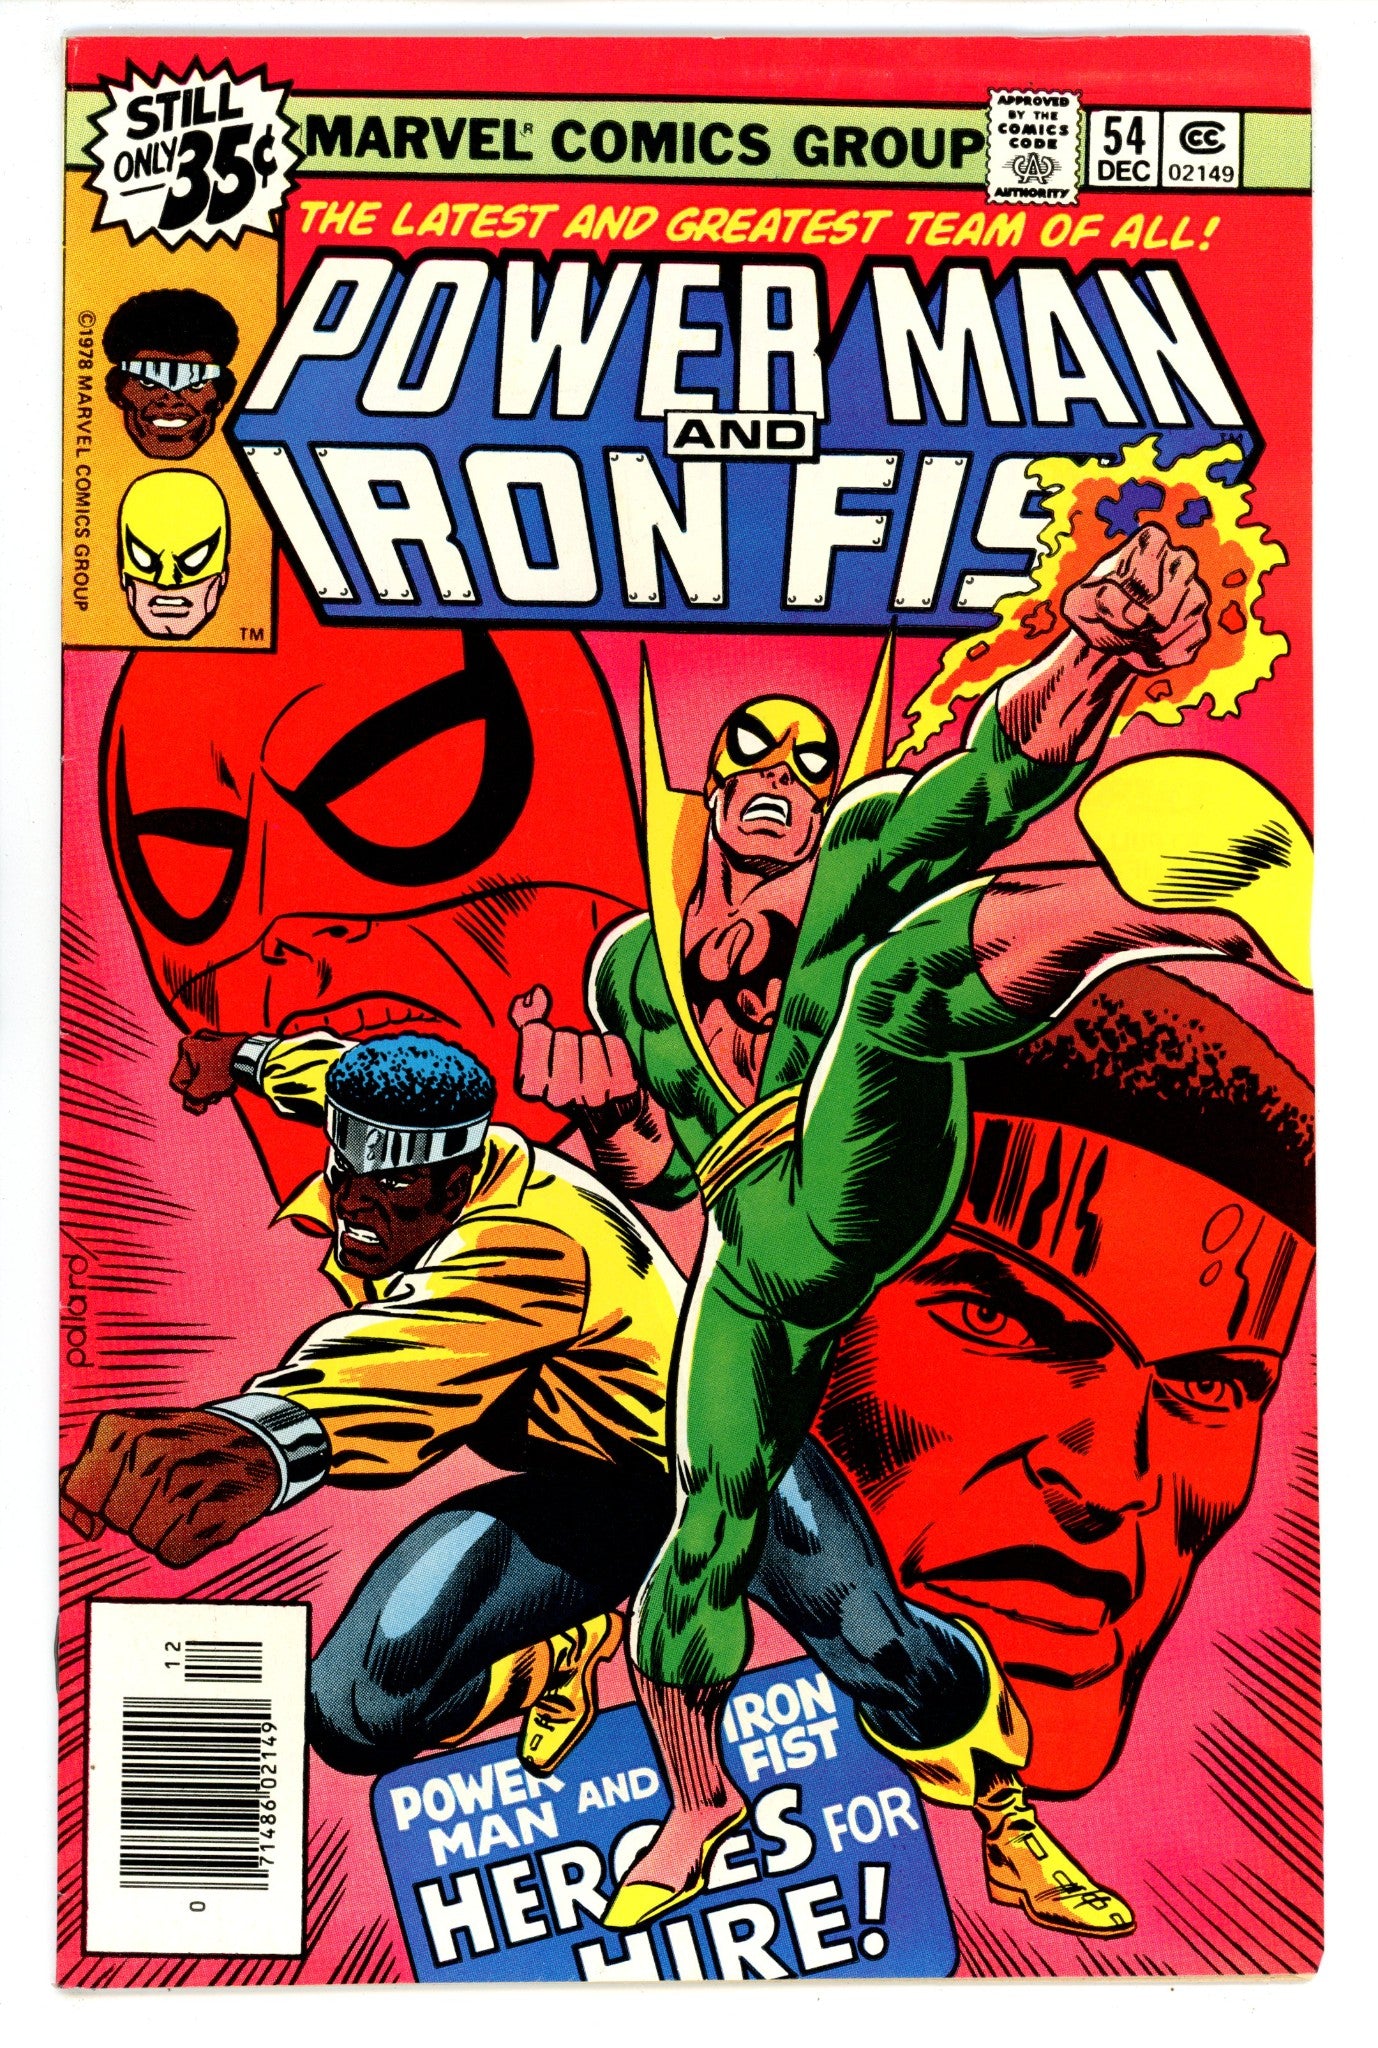 Power Man and Iron Fist Vol 1 54 VF- (7.5) (1978) 